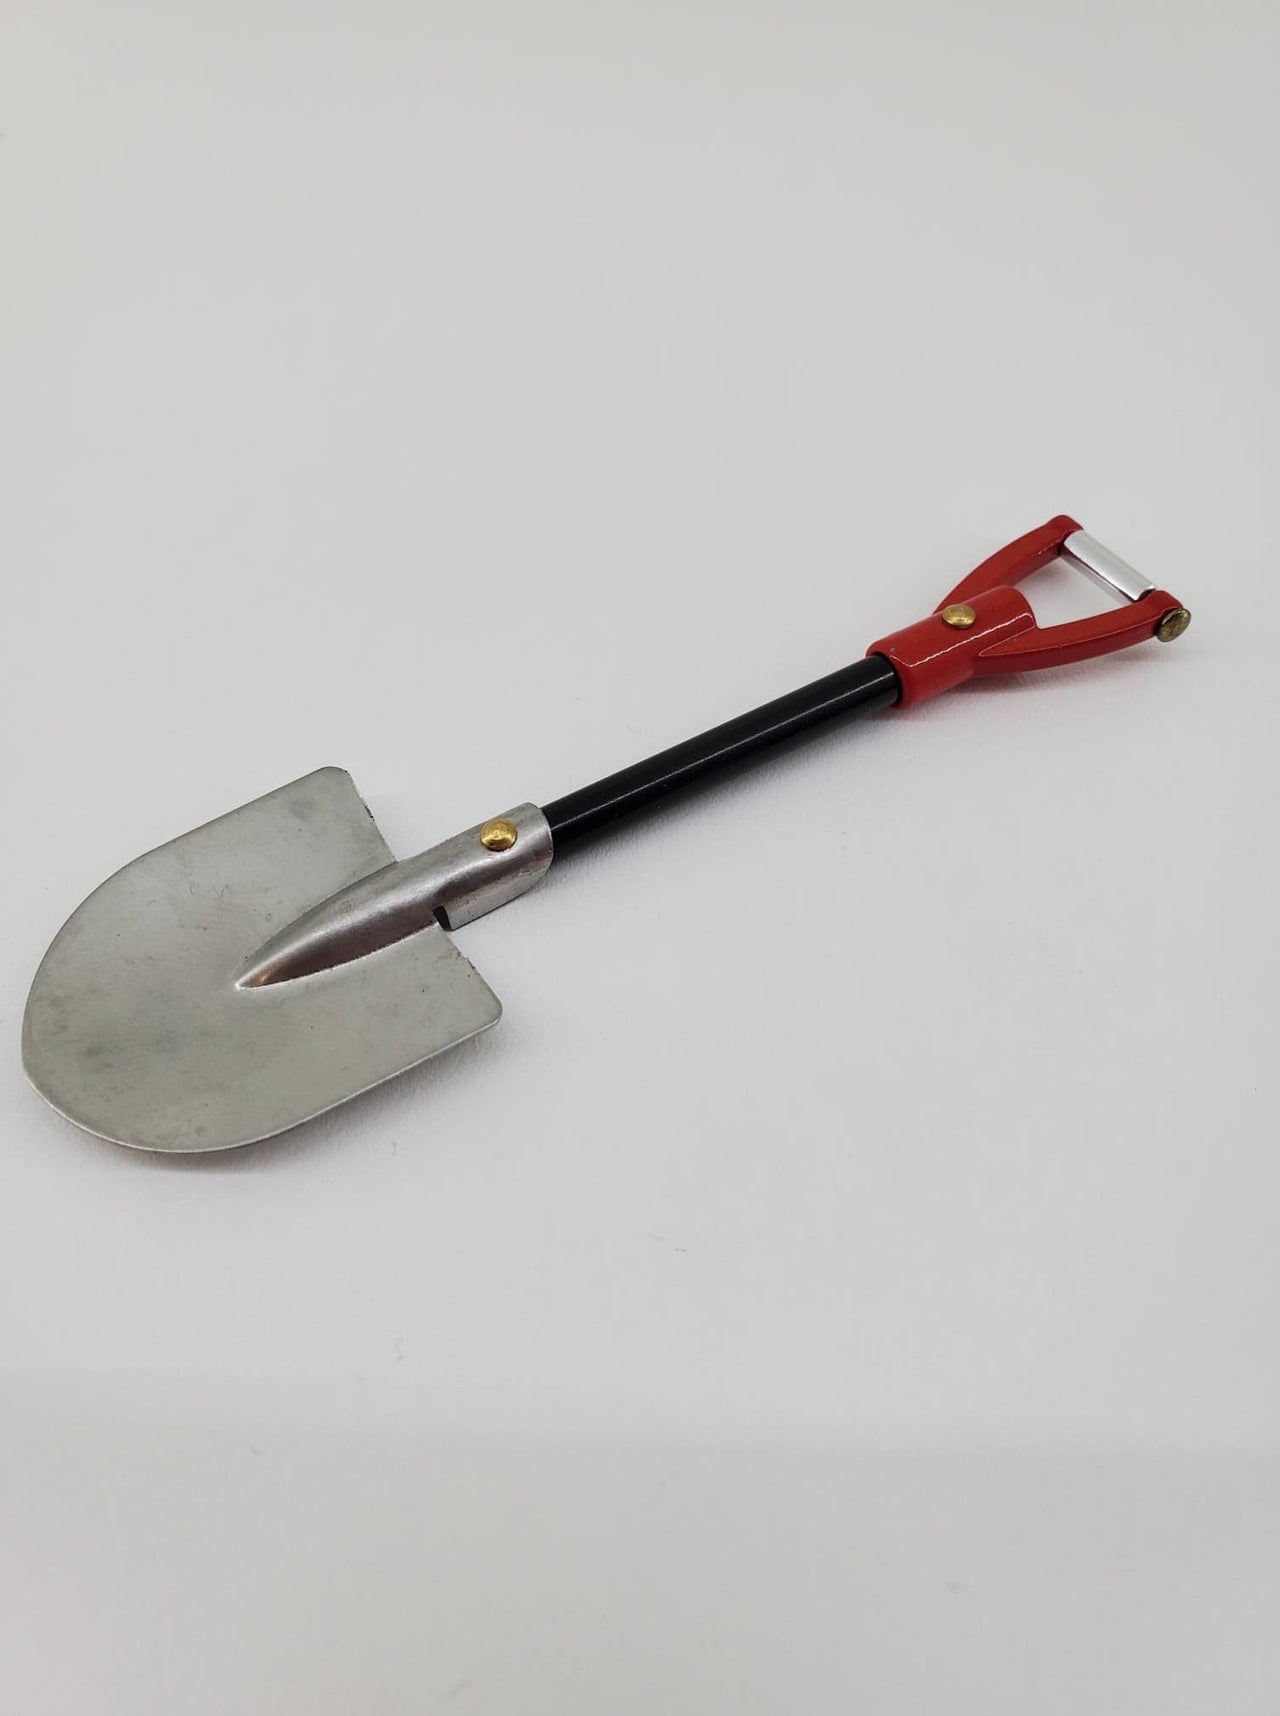 ZH-ACC-010 Aluminum shovel